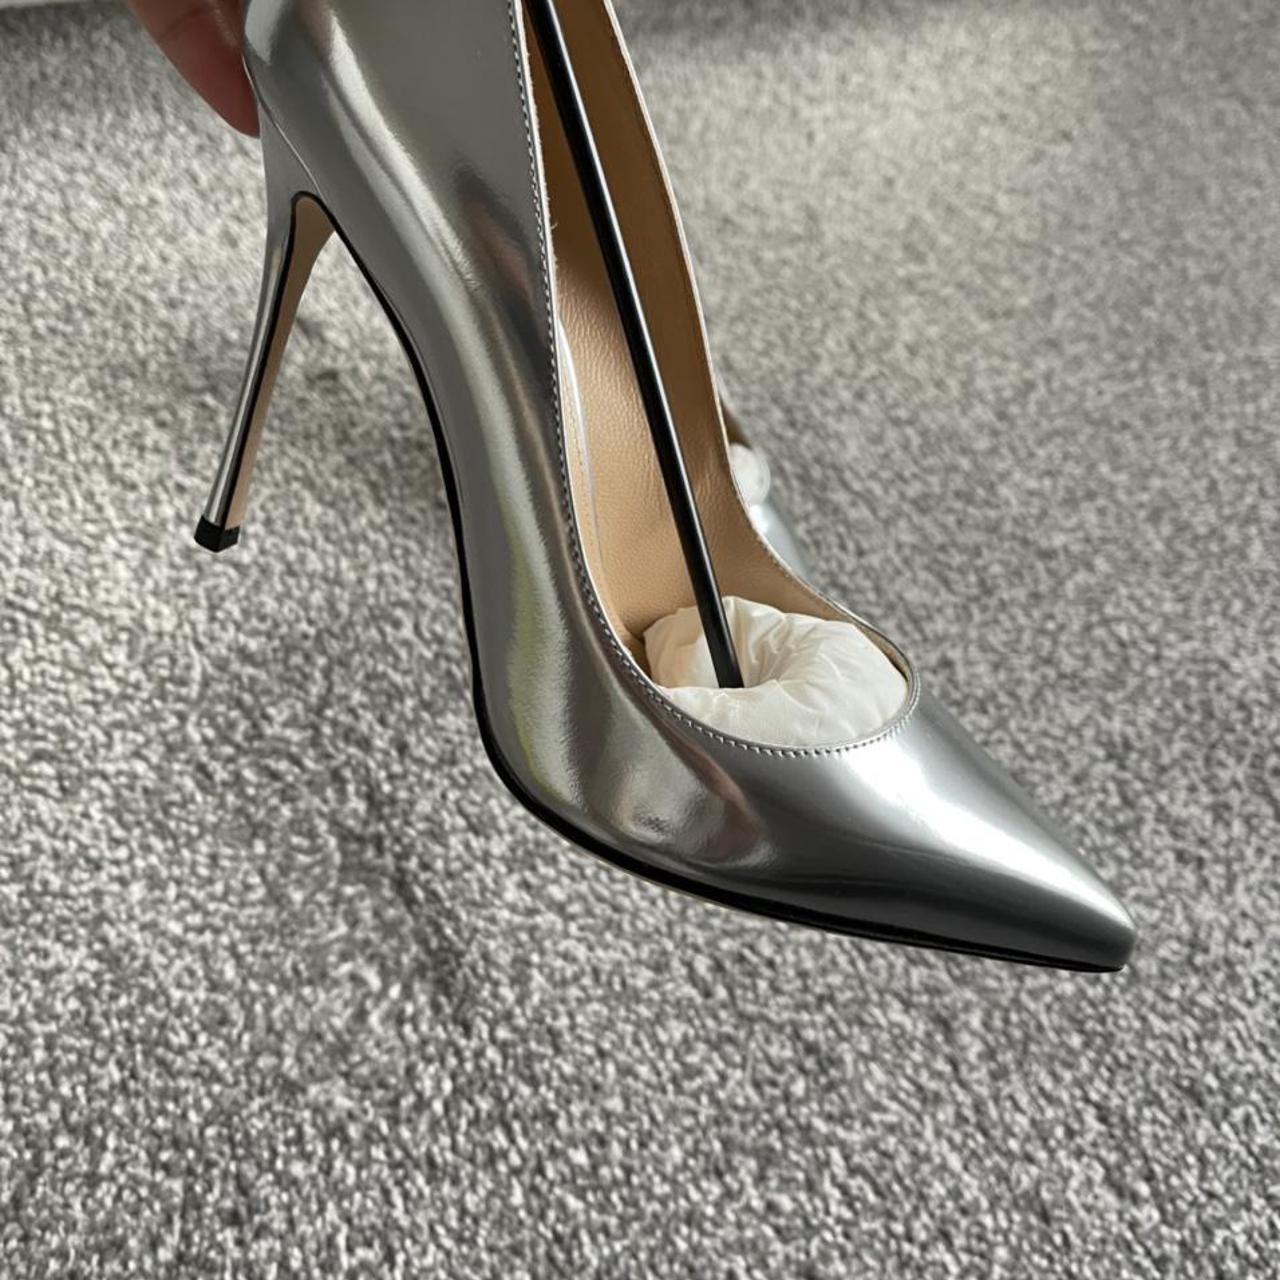 Product Image 3 - Brand new Sergio Rossi heels.